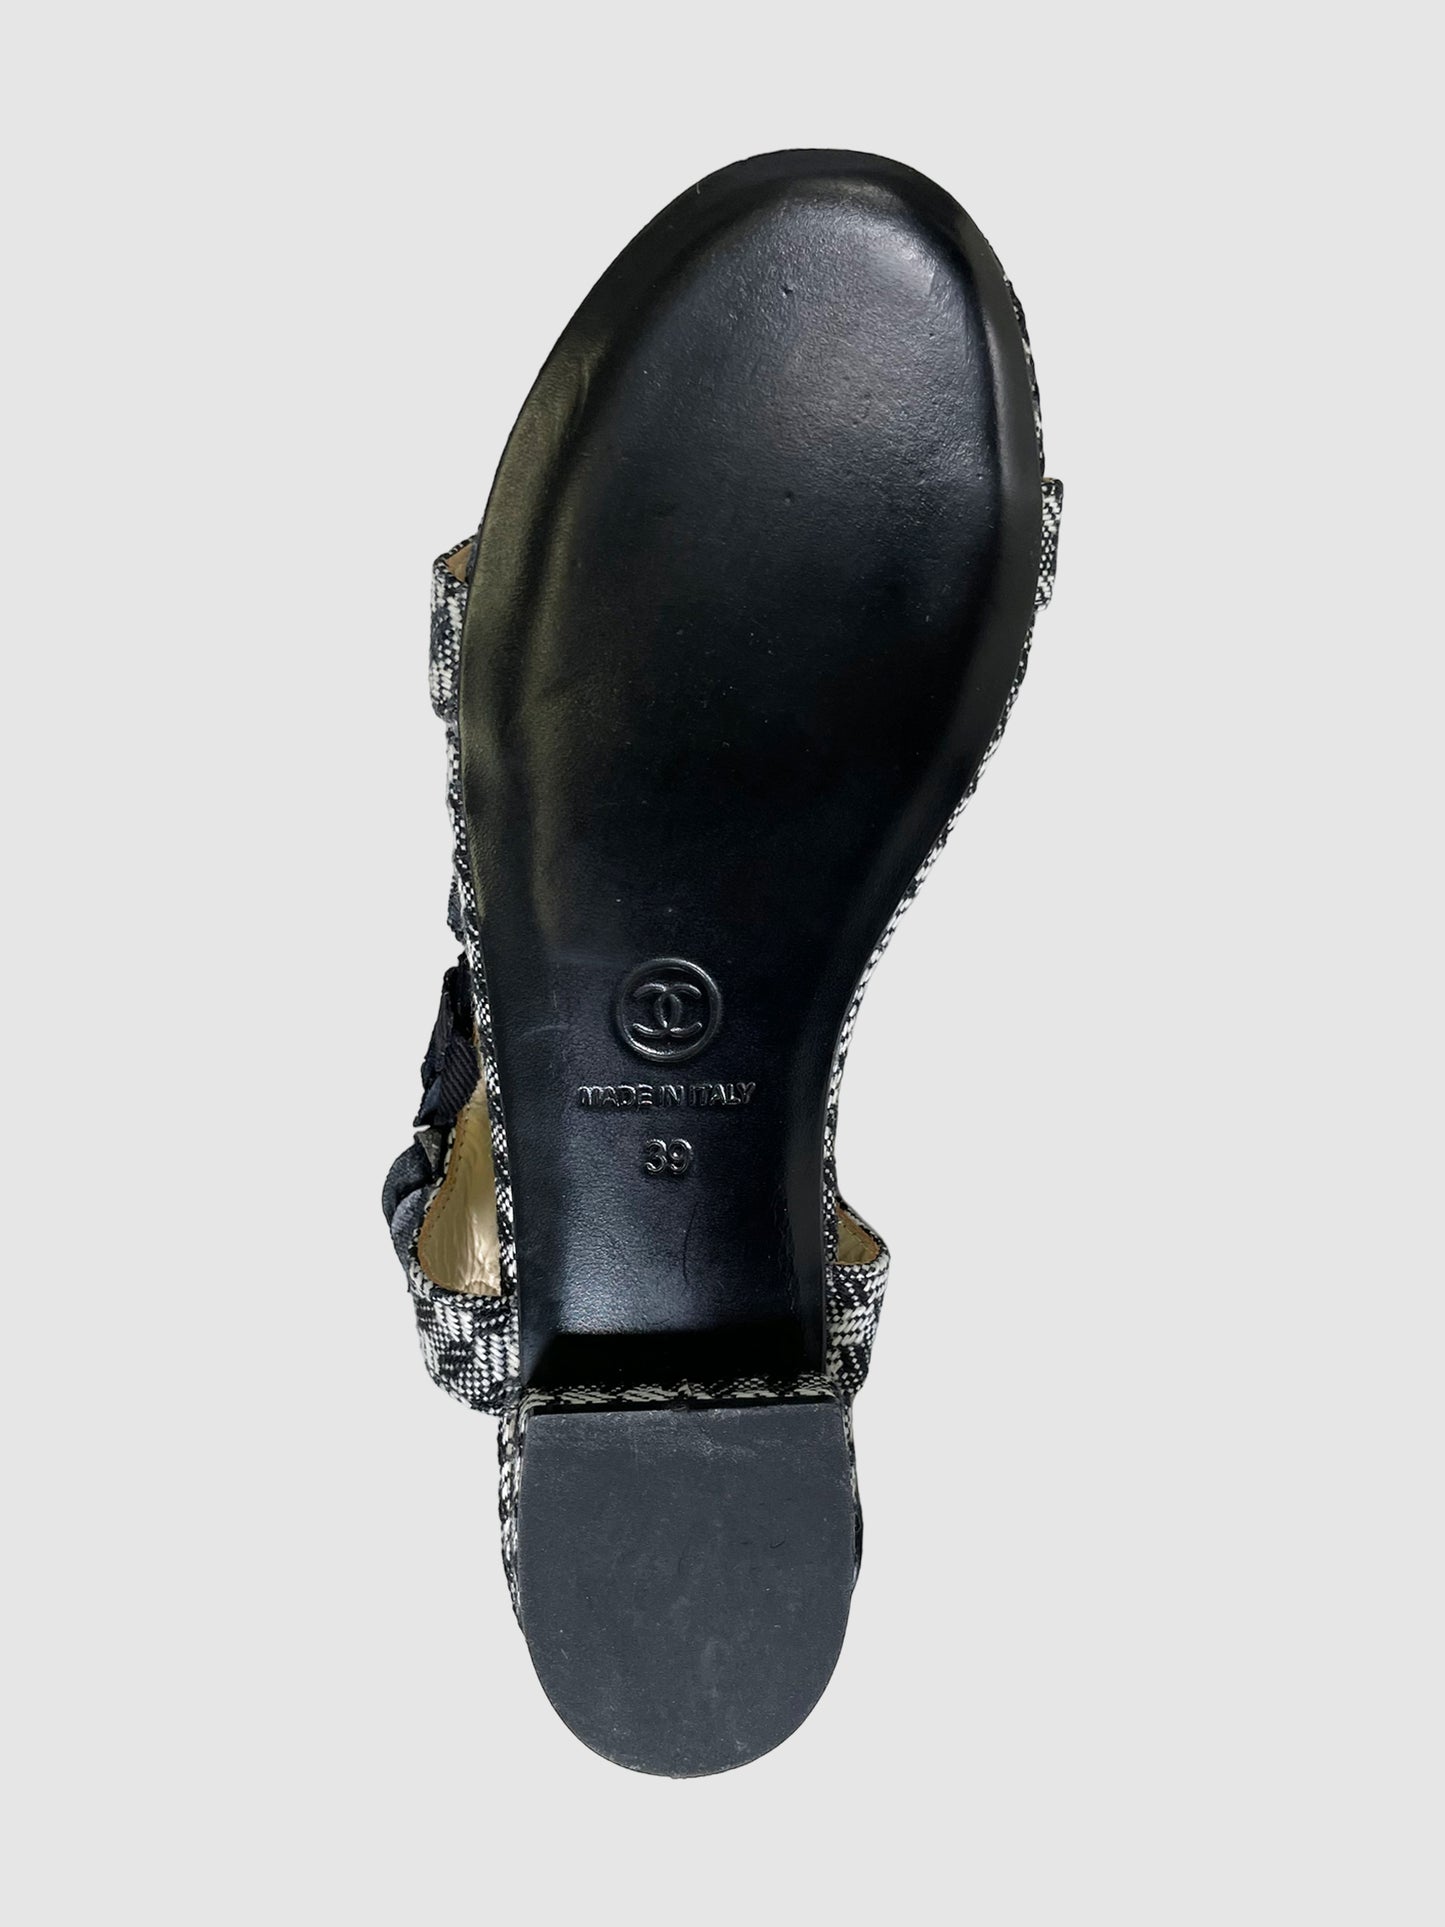 Houndstooth Floral Ankle Strap Sandals - Size 39